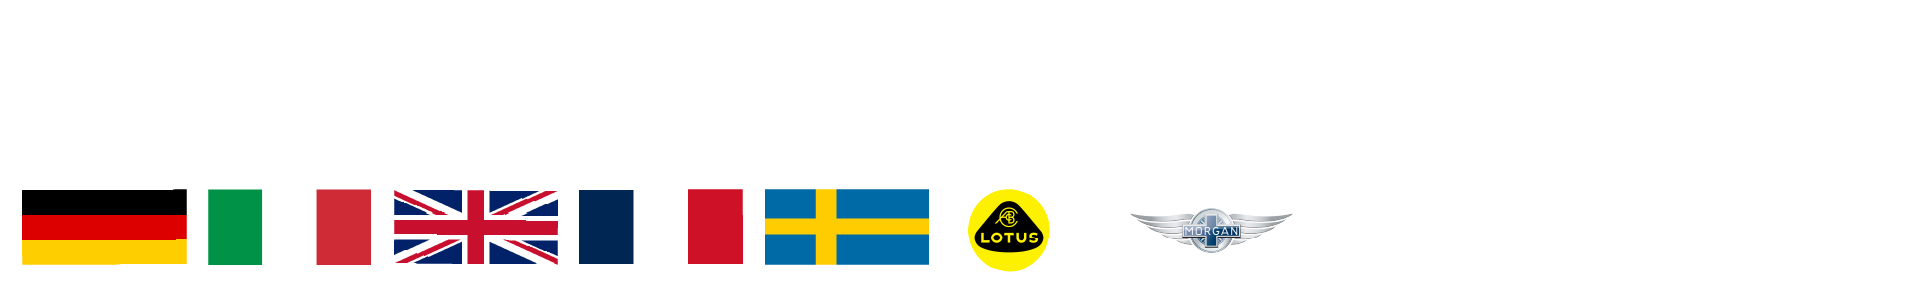 Auto Europe - Servicing European Cars